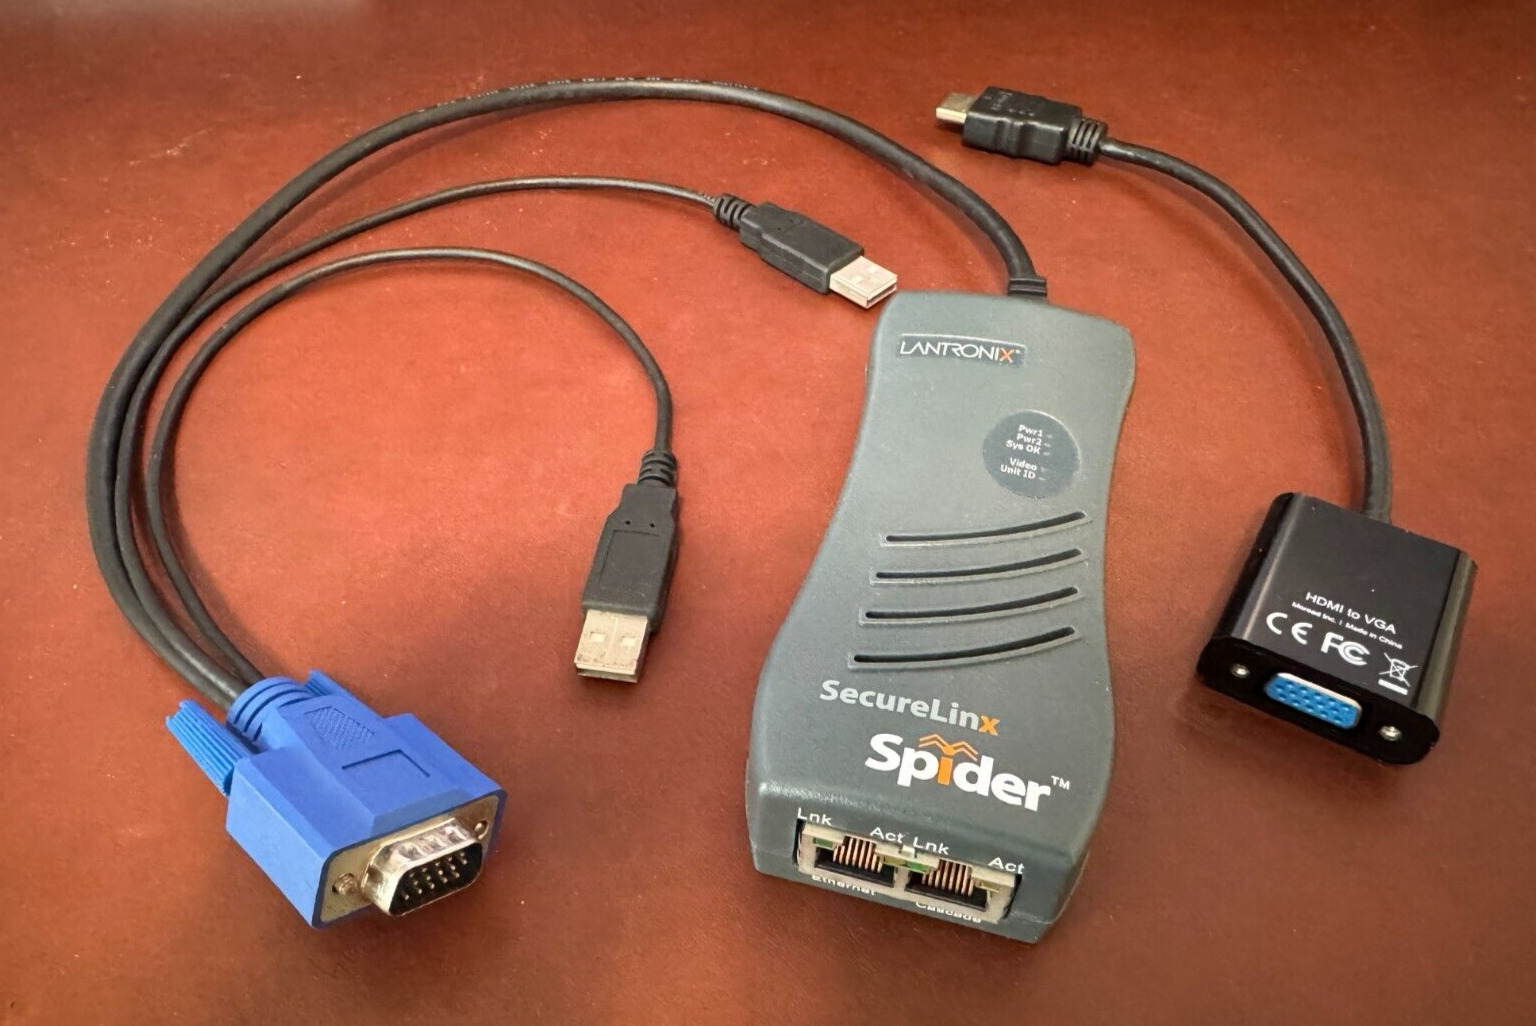 Lantronix SLS200 SecureLinx Spider Standalone KVM over IP Dongle (USB & VGA)